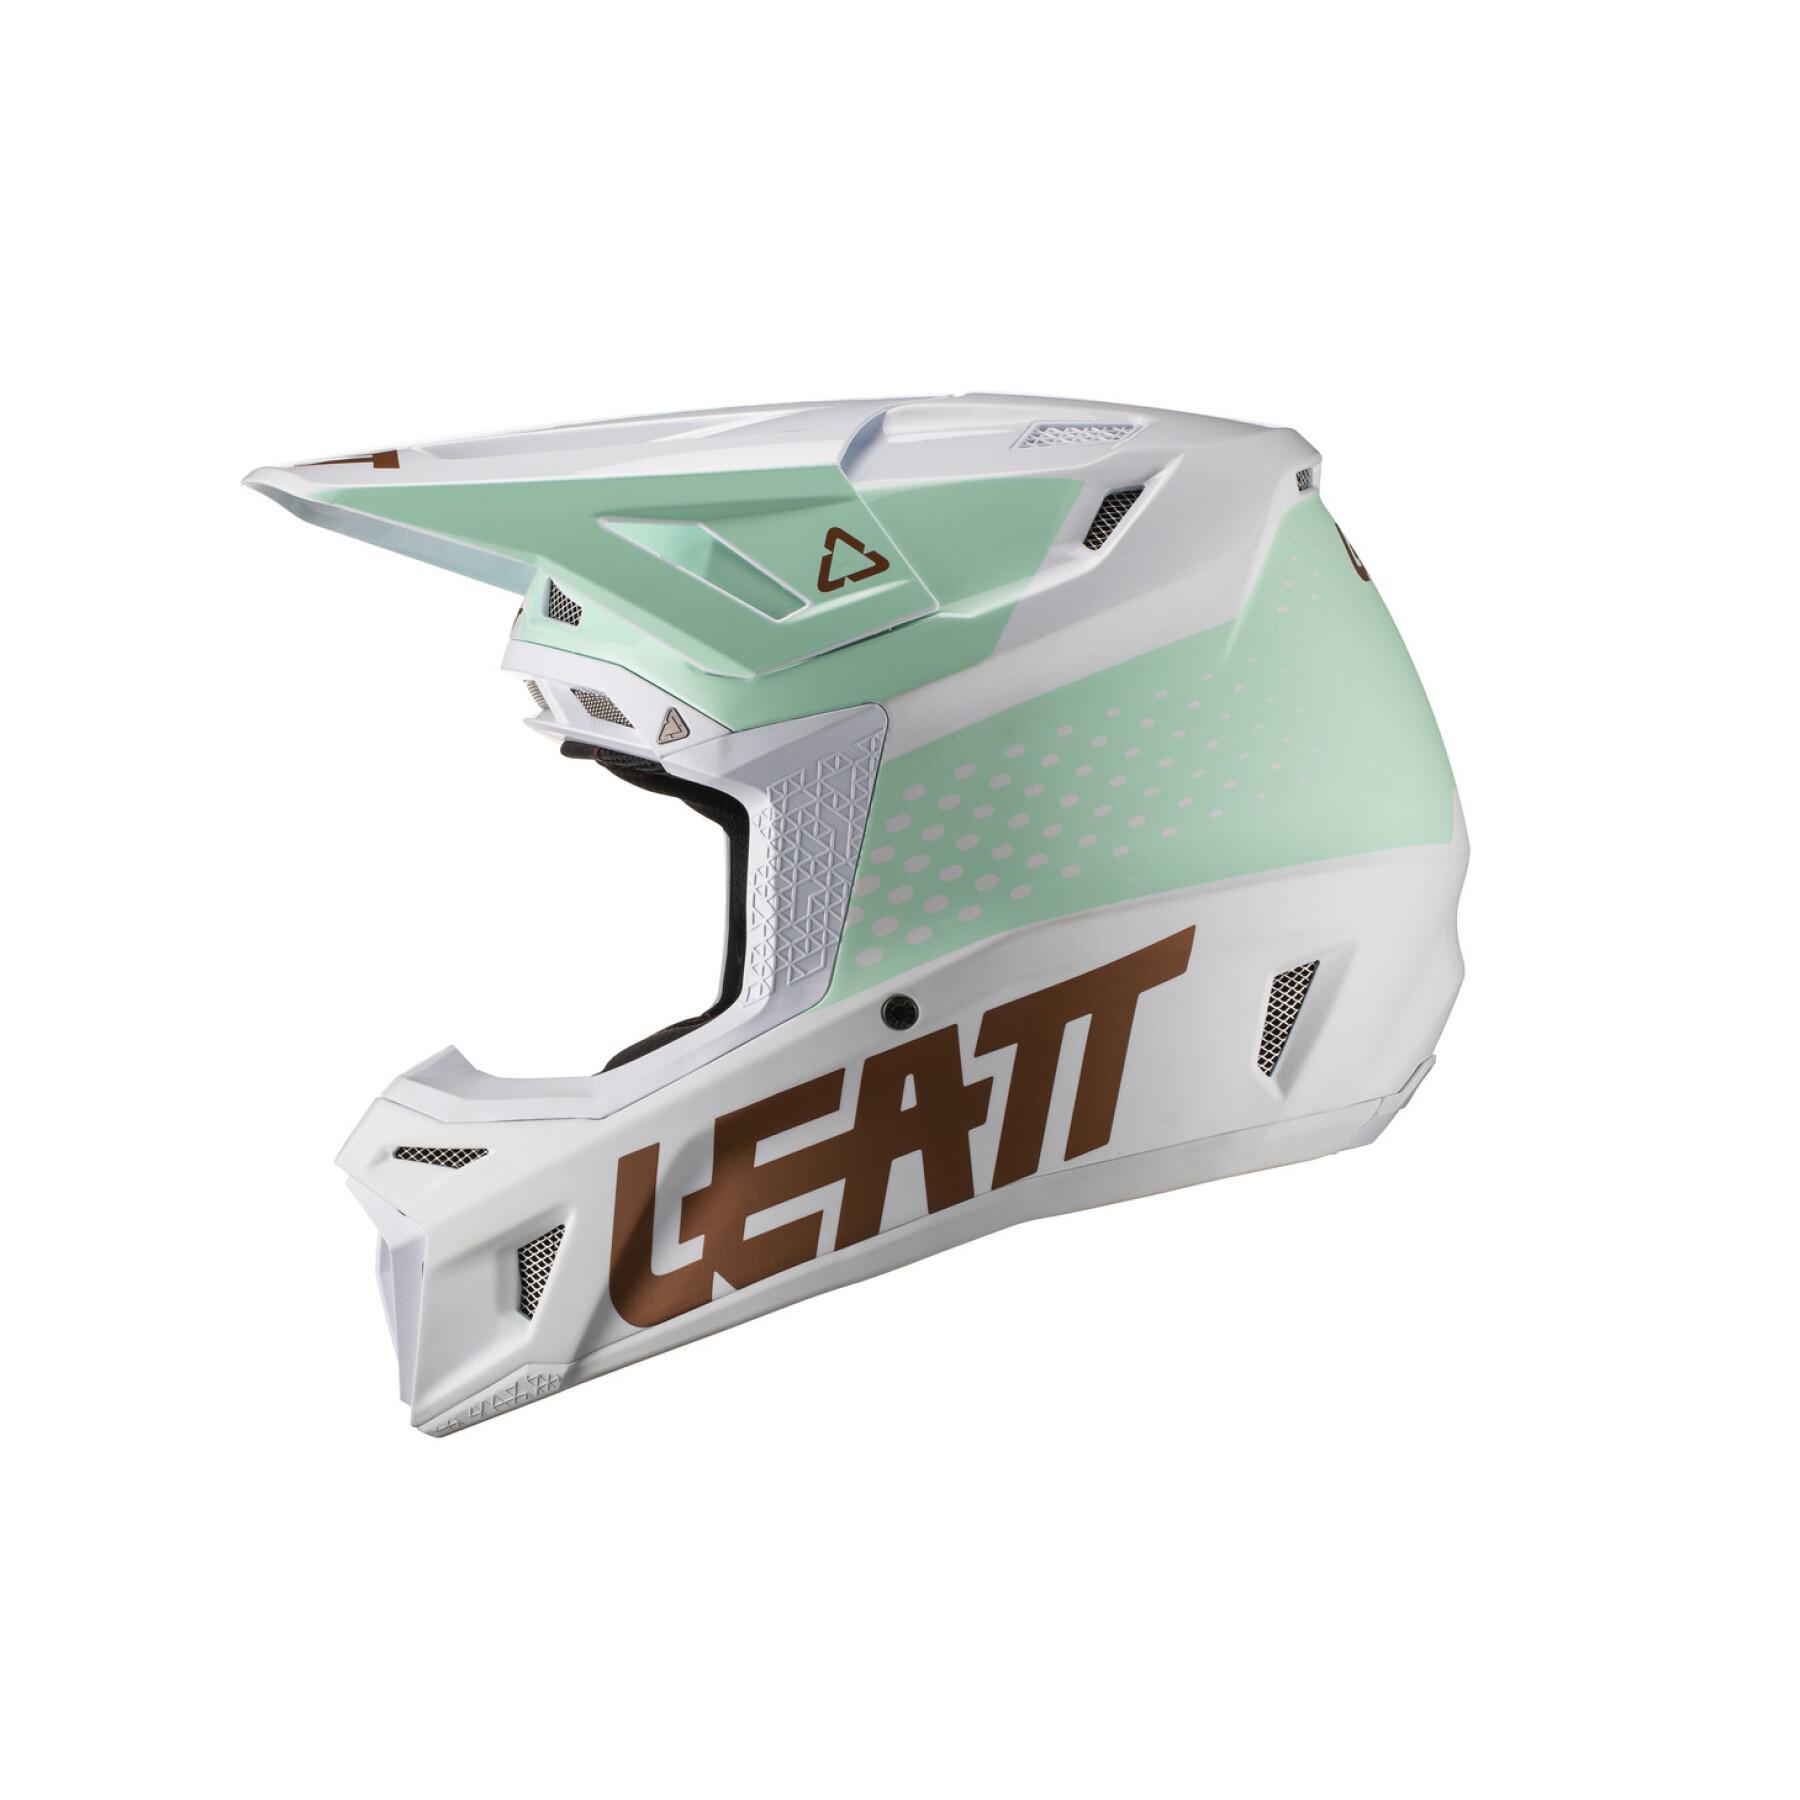 Casco de moto con gafas incluidas Leatt 8.5 V21.1